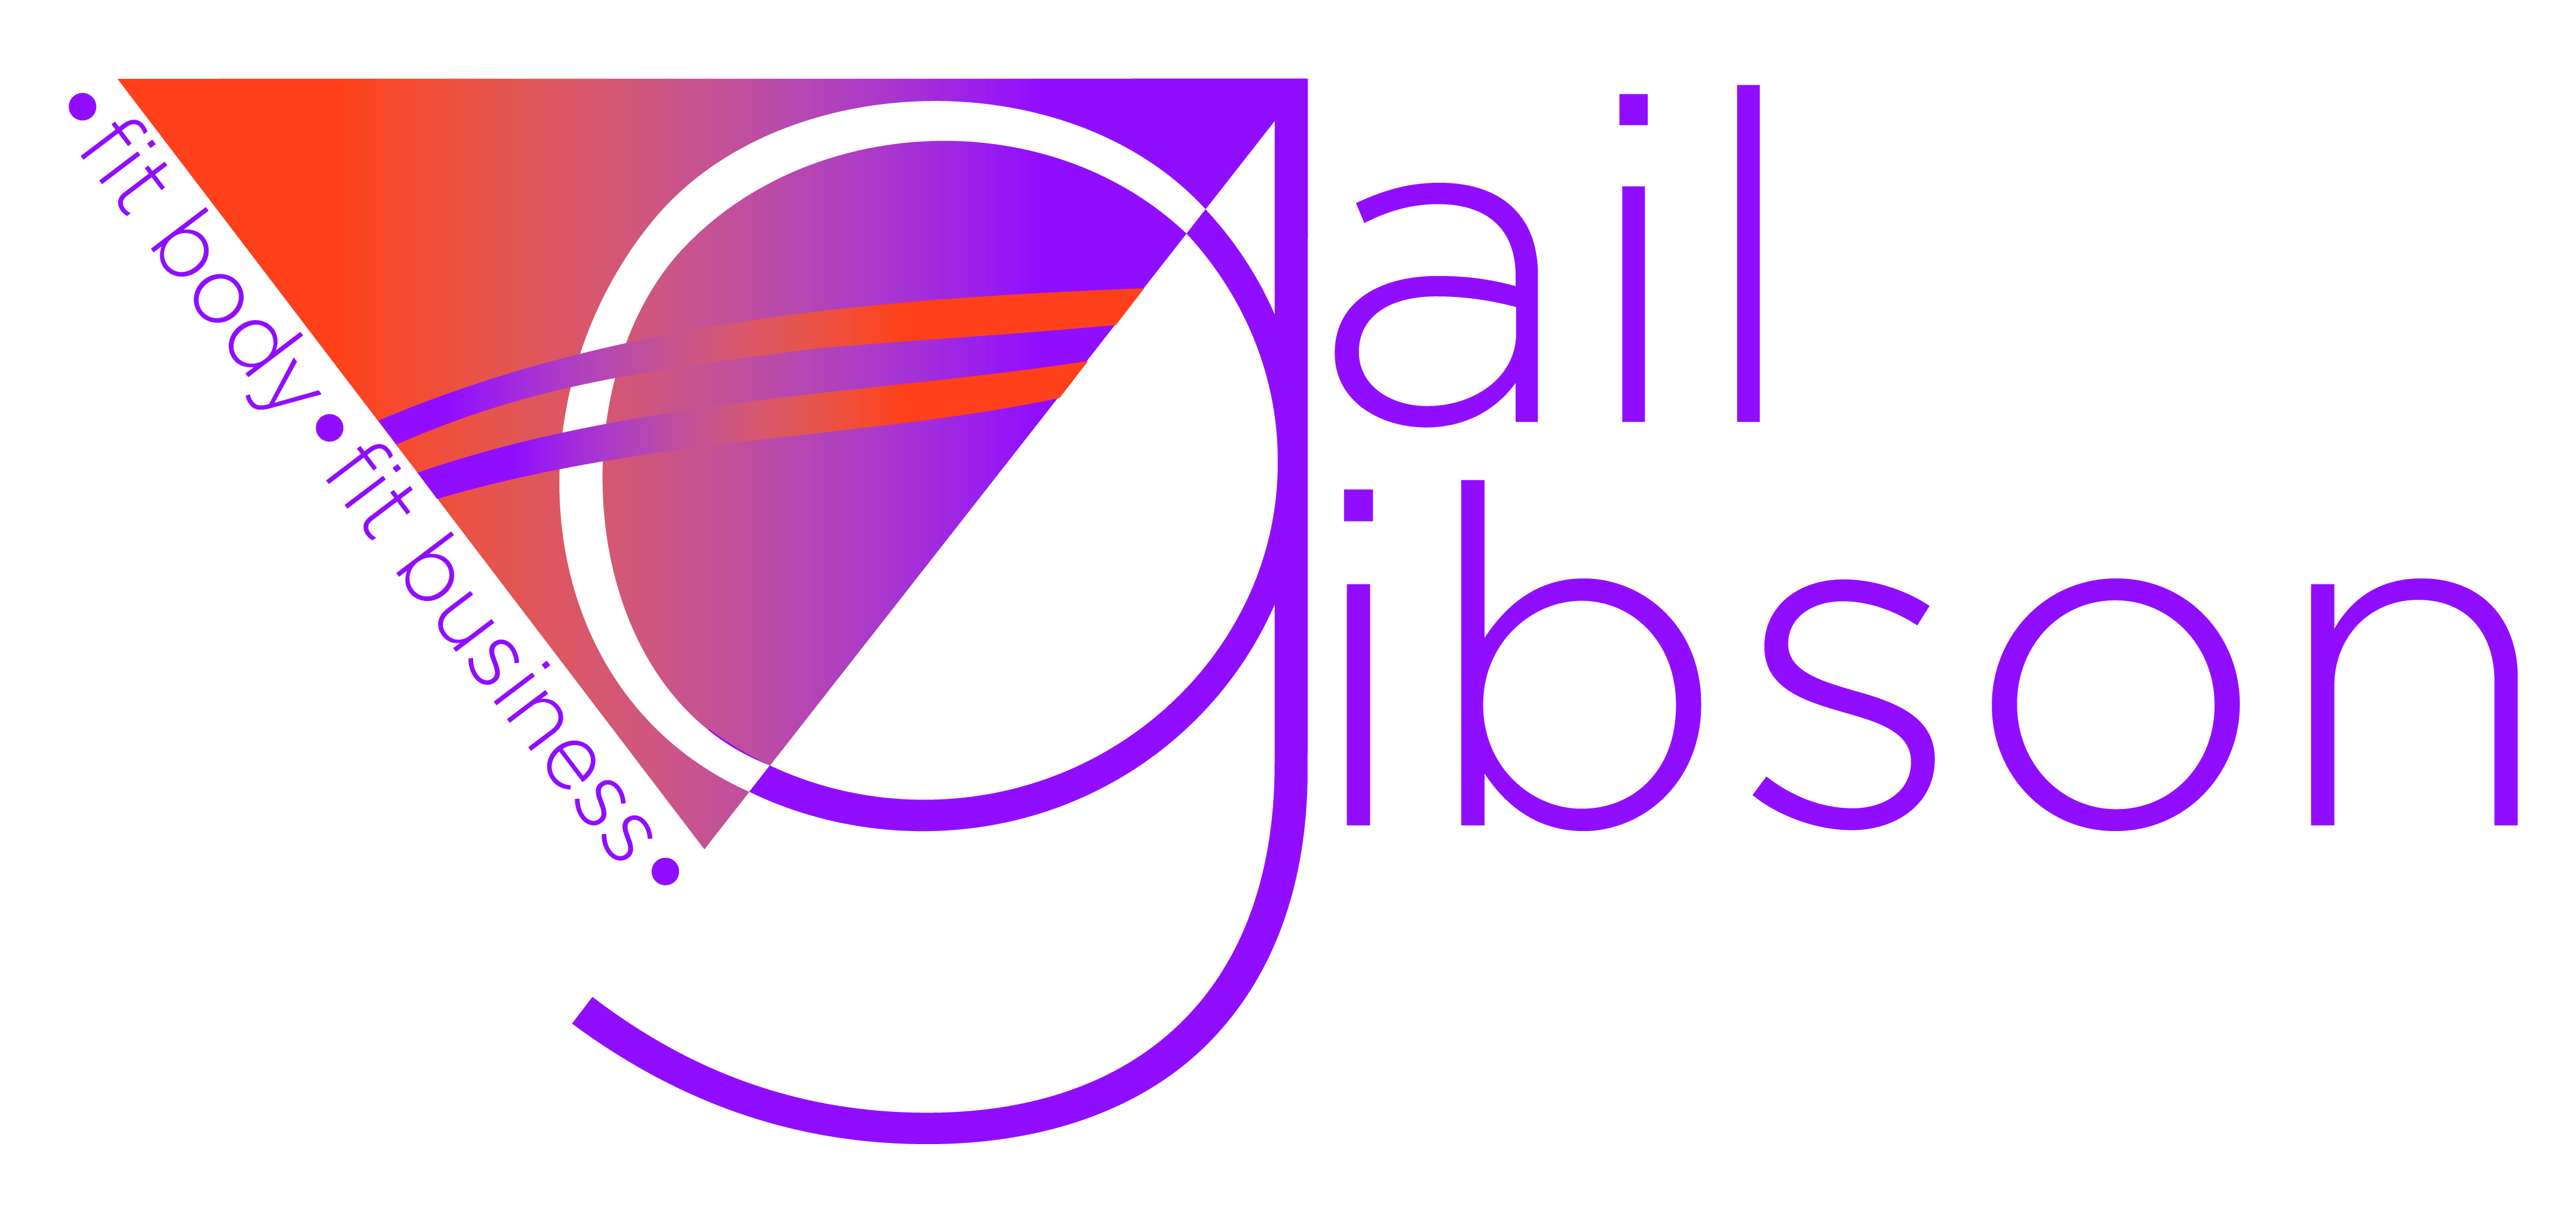 Gail Gibson Business Performance Coach Logo